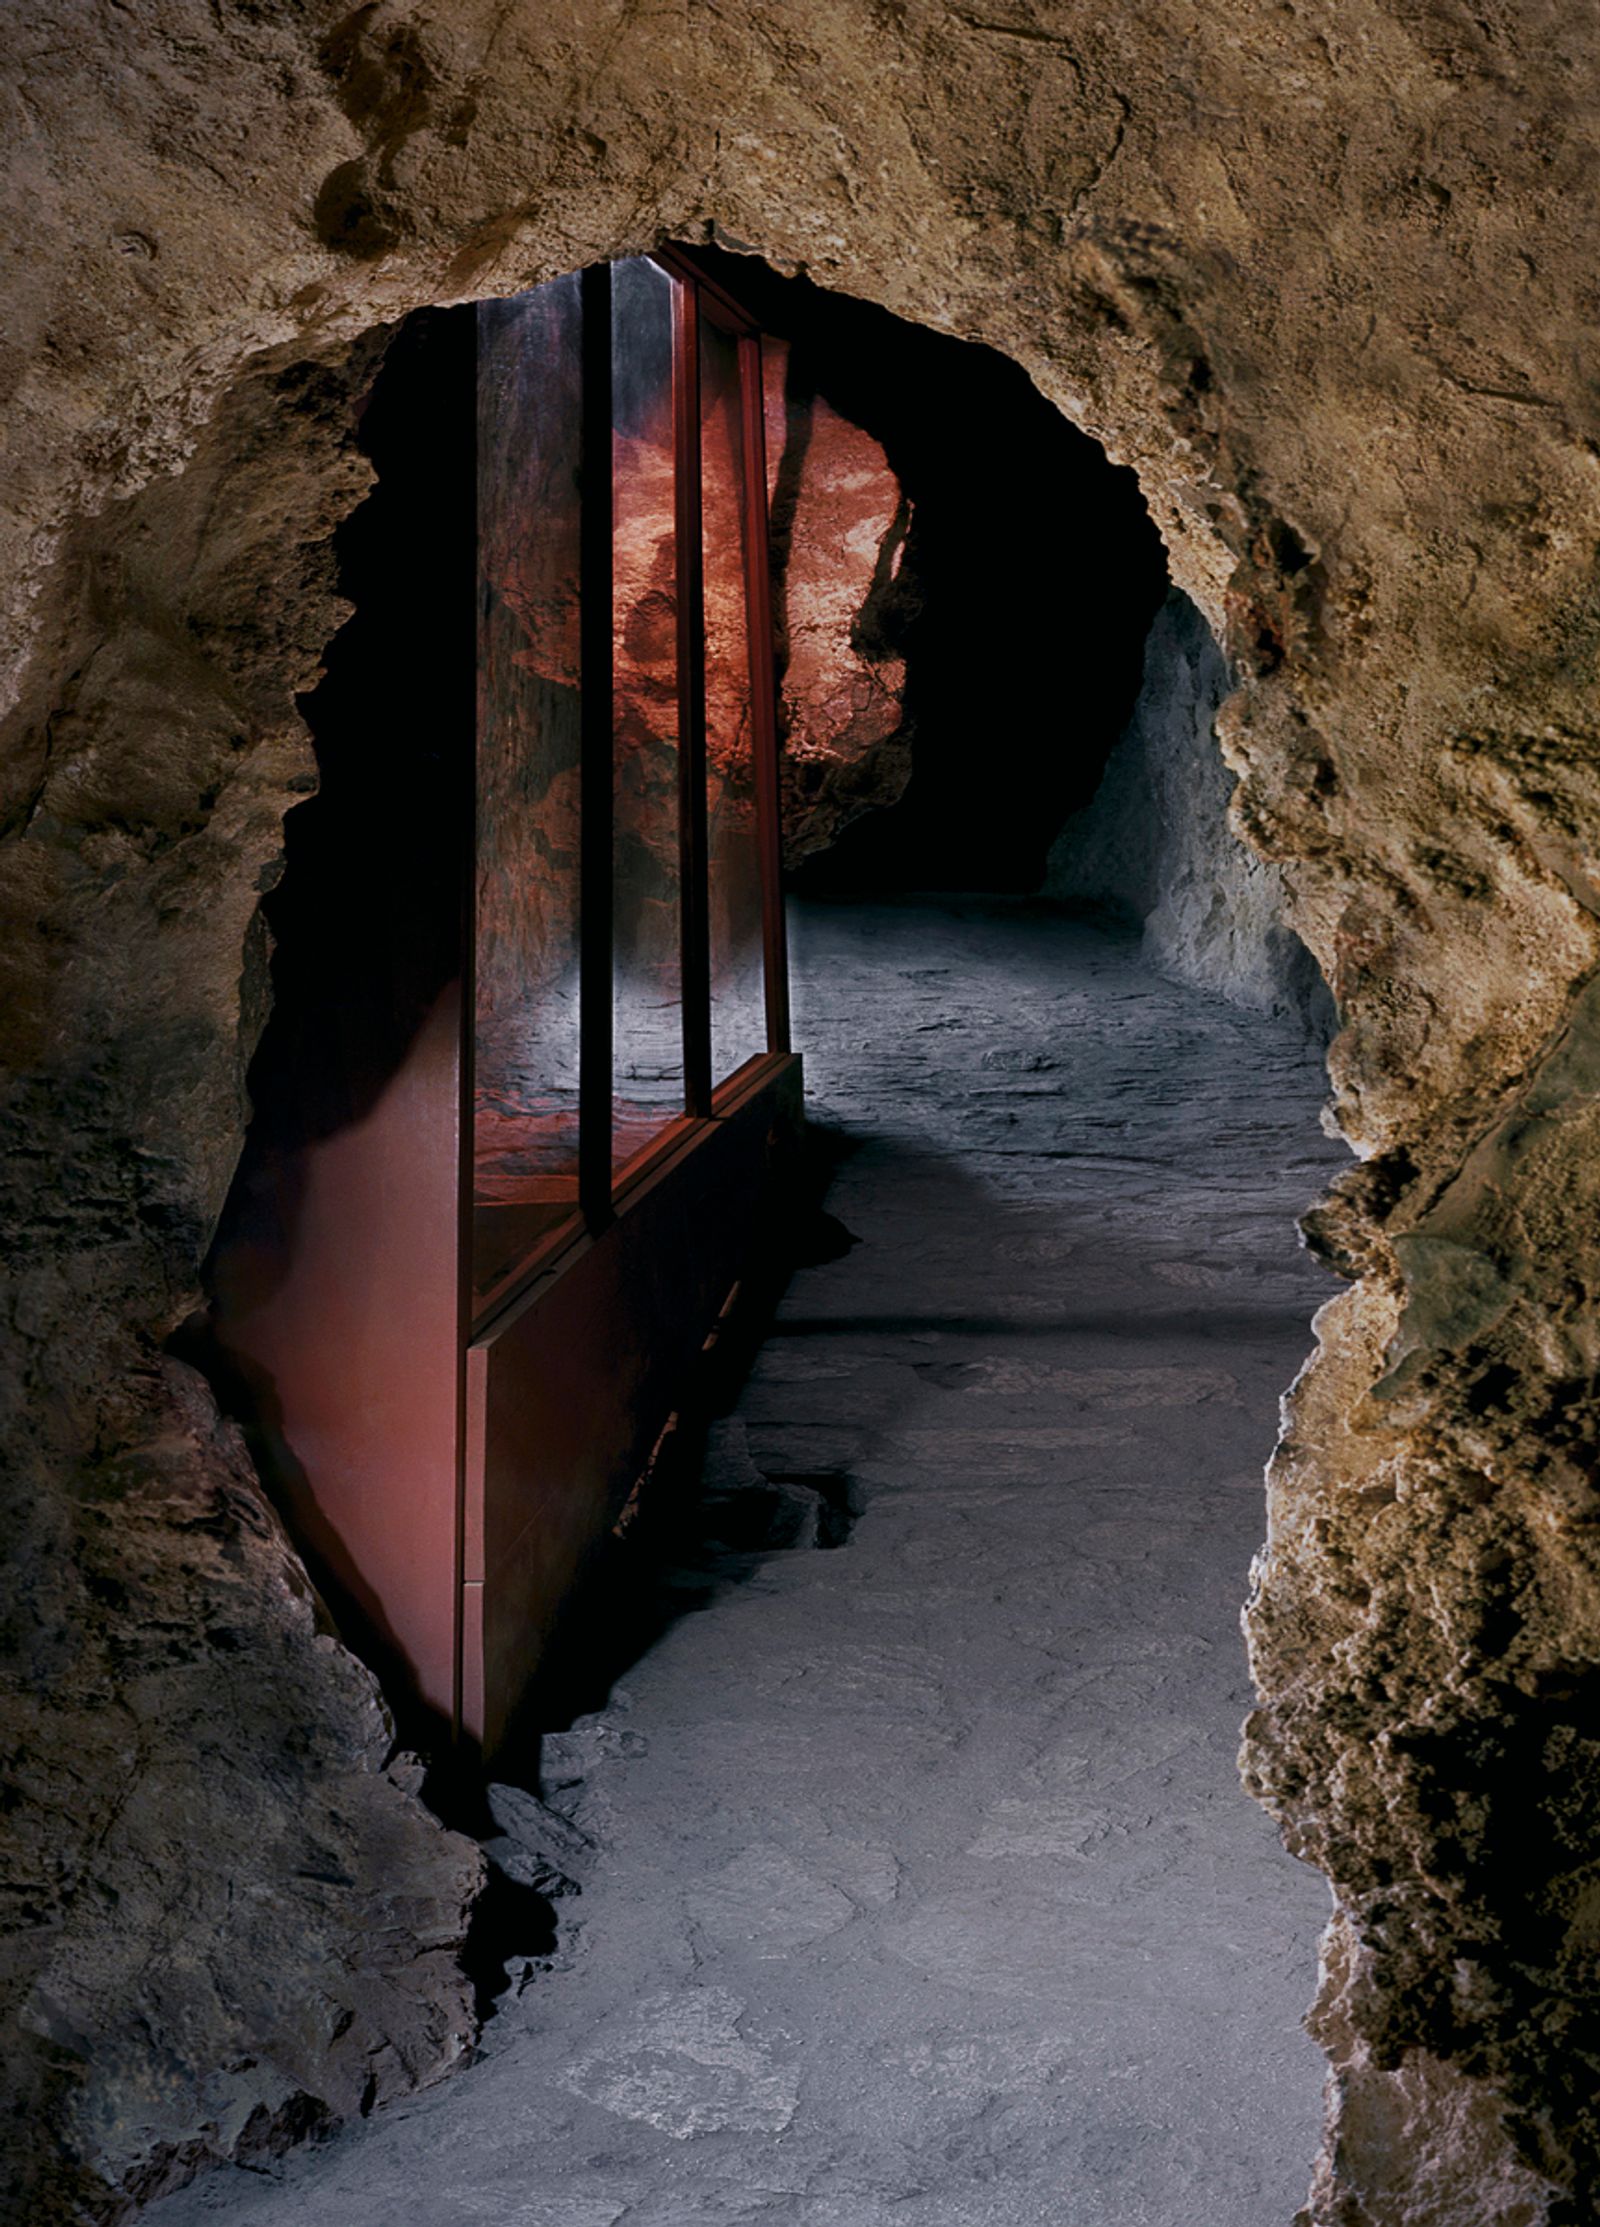 © Austin Irving - Display No. 1, Colossal Cave, Vail, AZ, 2013